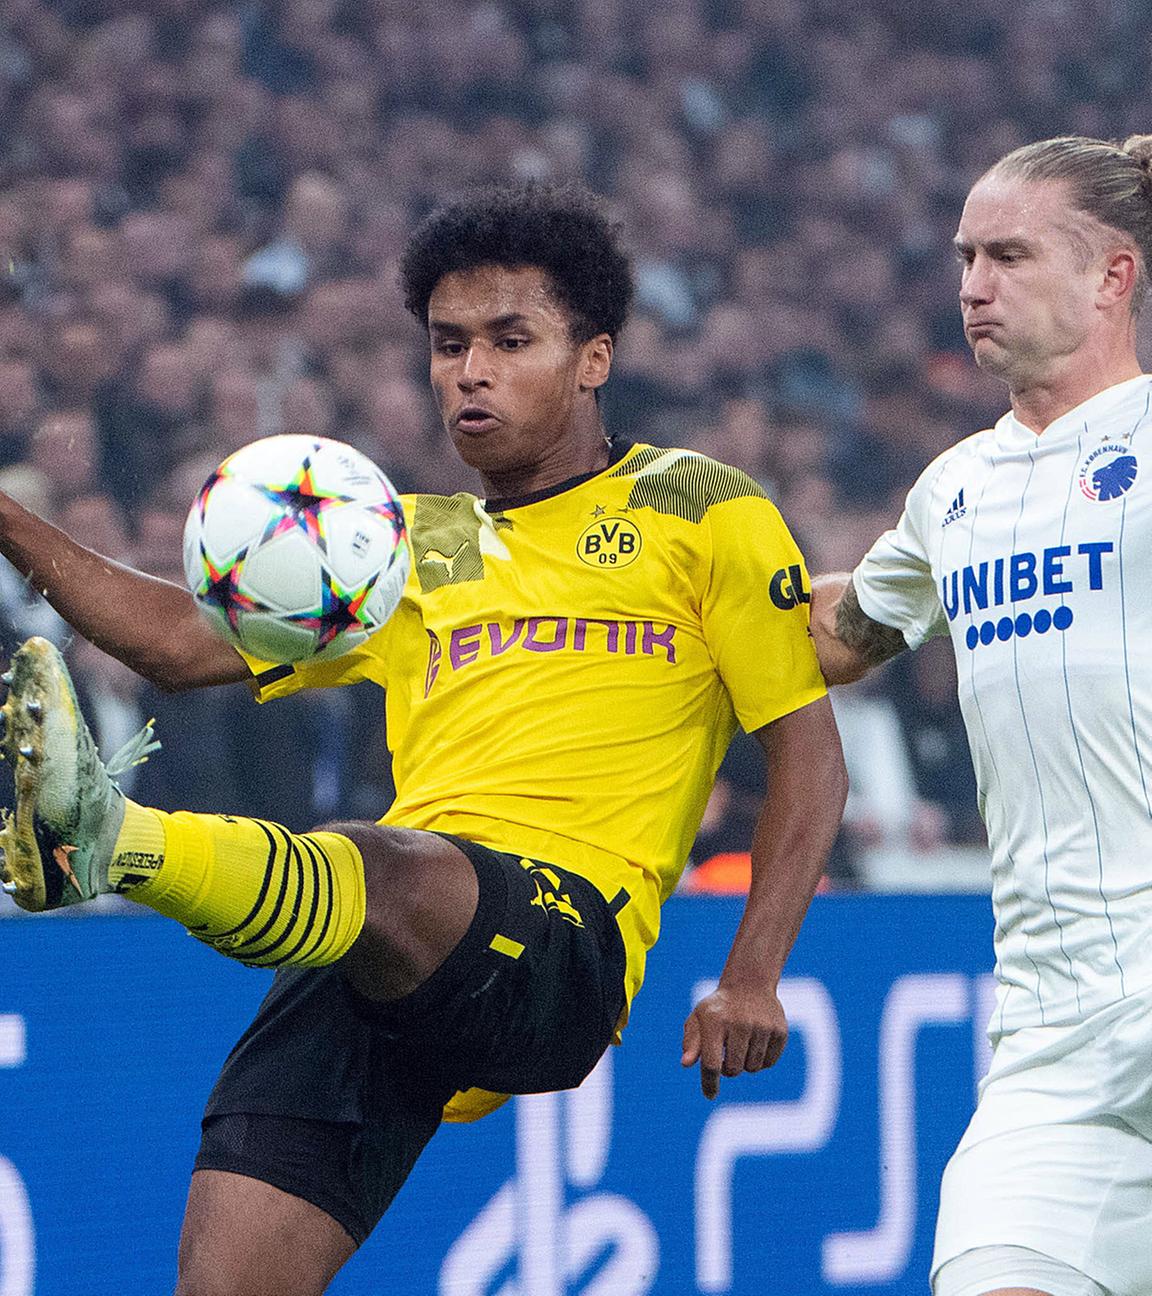 02.11.2022, Kopenhagen: Karim Adeyemi (Borussia Dortmund) im Zweikampf mit Christian Soerensen (FC Kopenhagen)